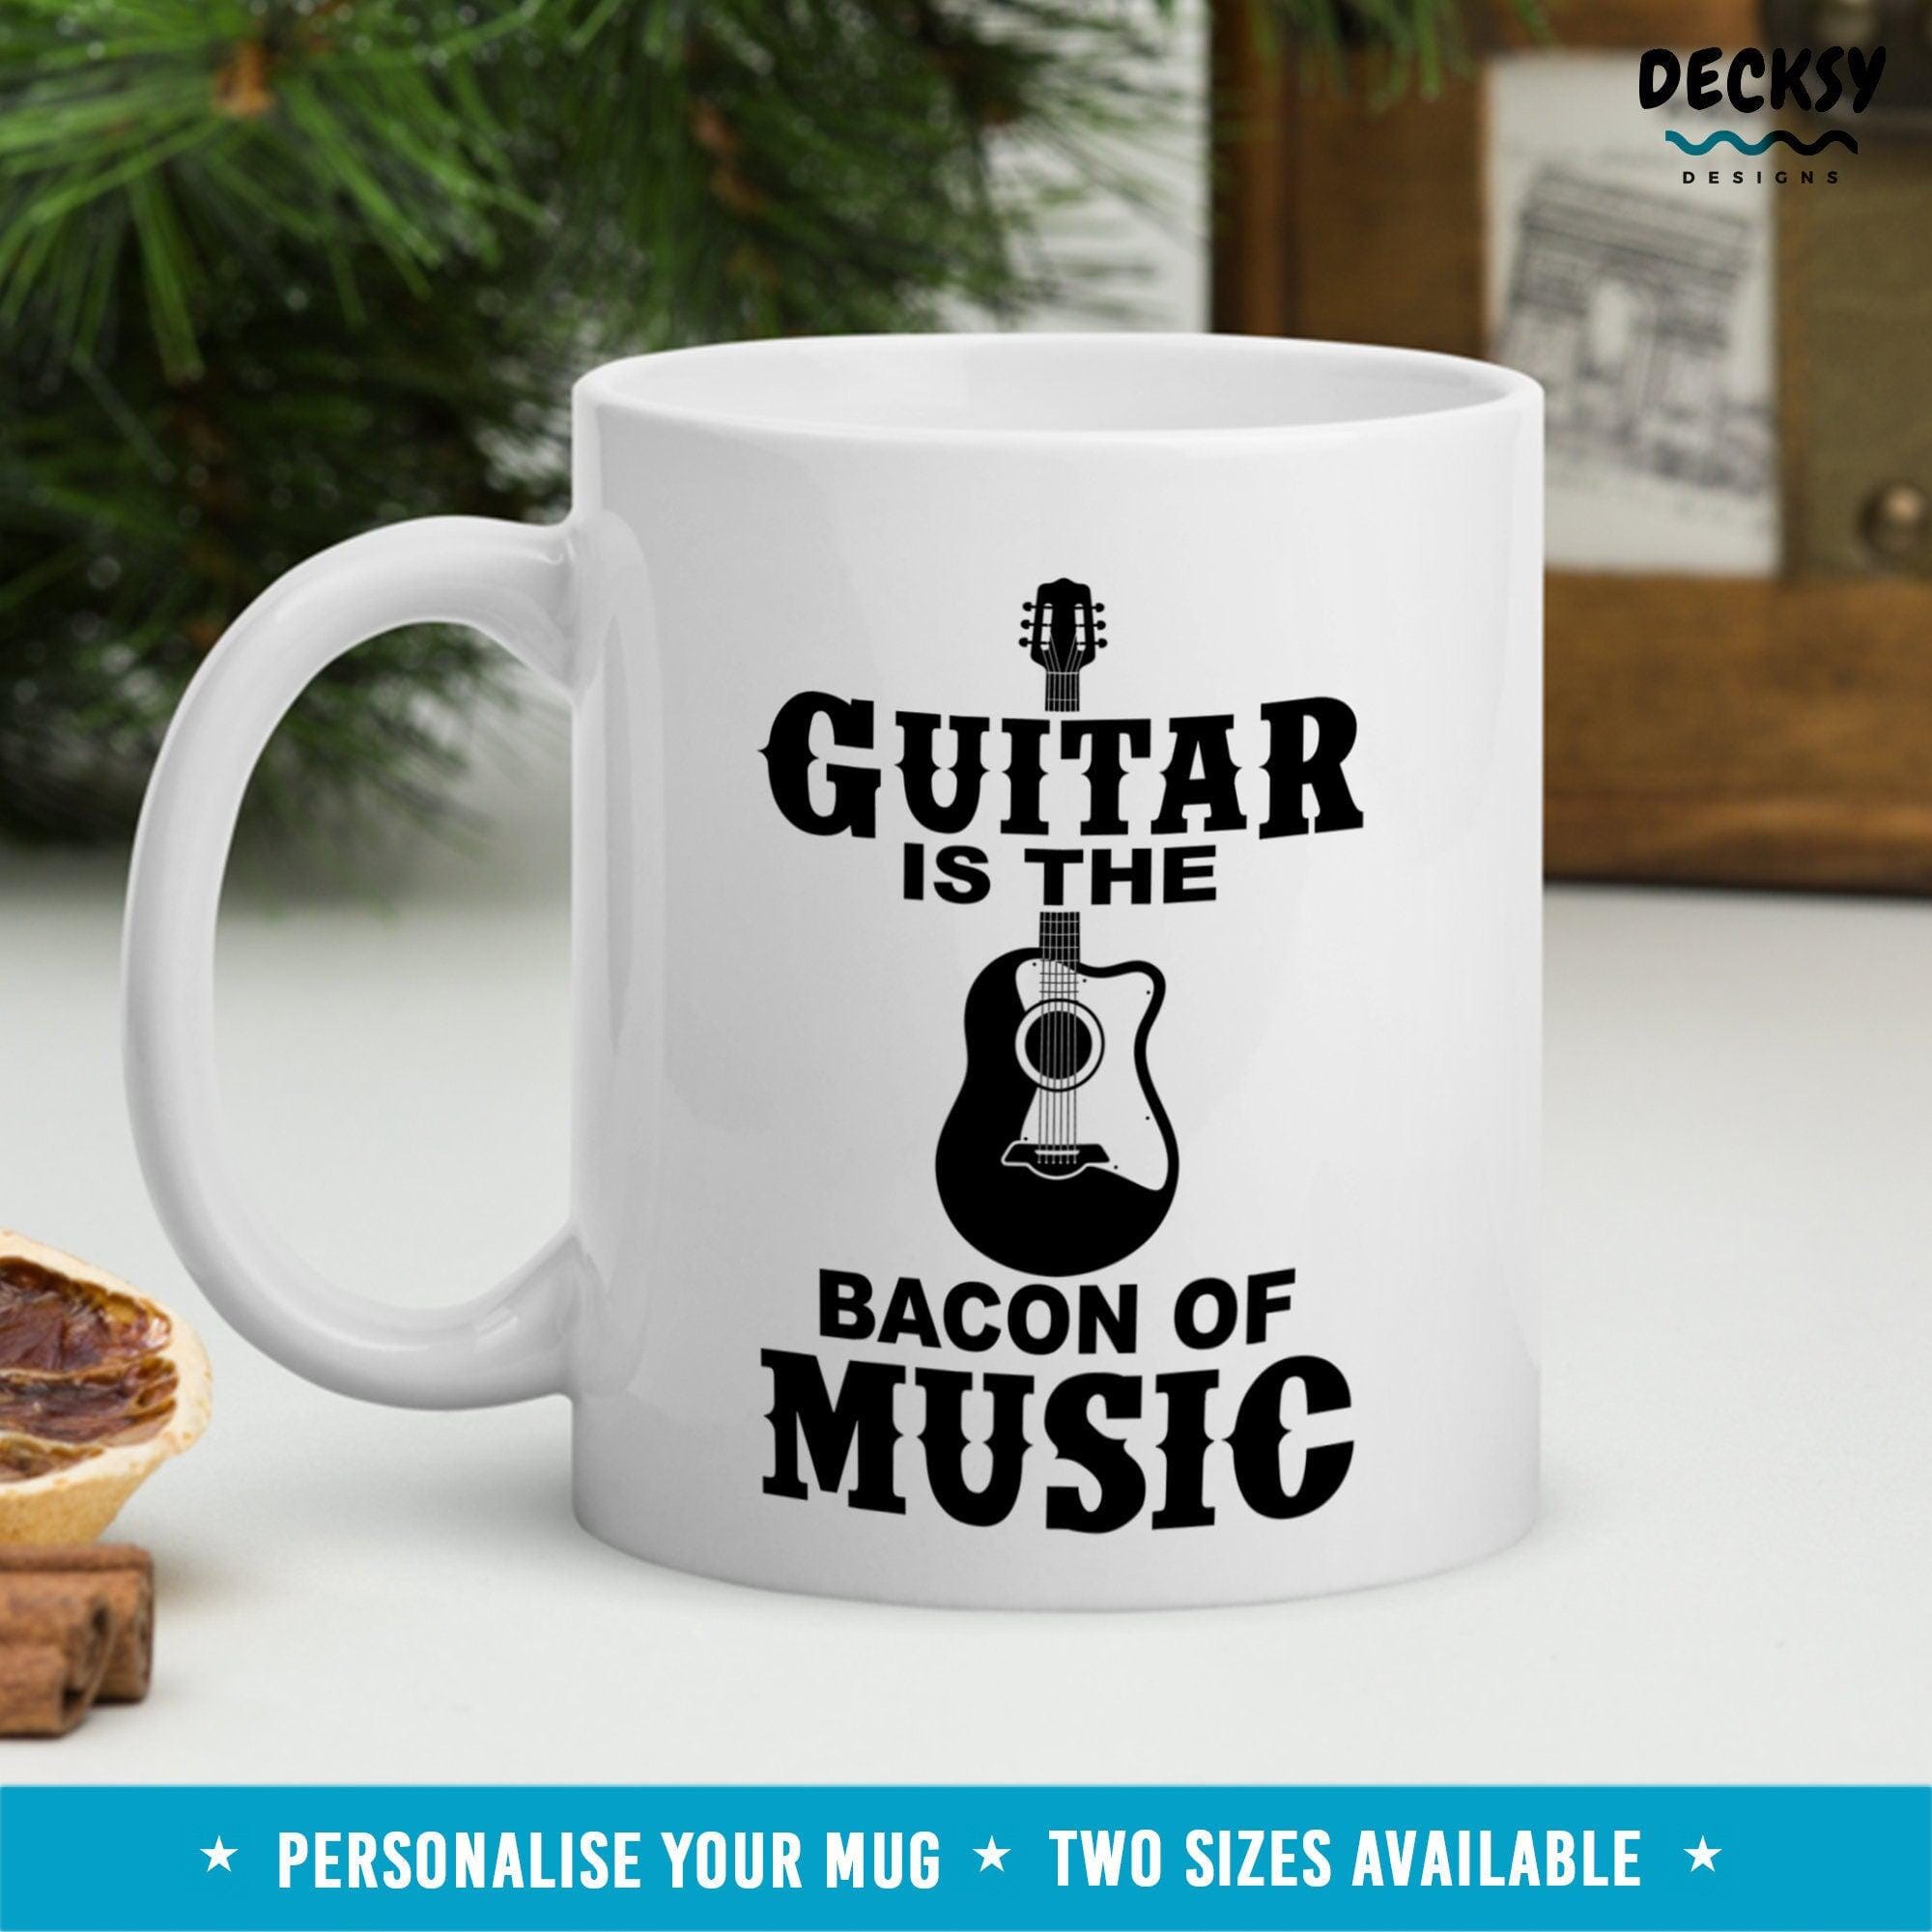 Funny Guitar Mug, Gift For Guitarist-Home & Living:Kitchen & Dining:Drink & Barware:Drinkware:Mugs-DecksyDesigns-11 Oz-NO PERSONALISATION-DecksyDesigns